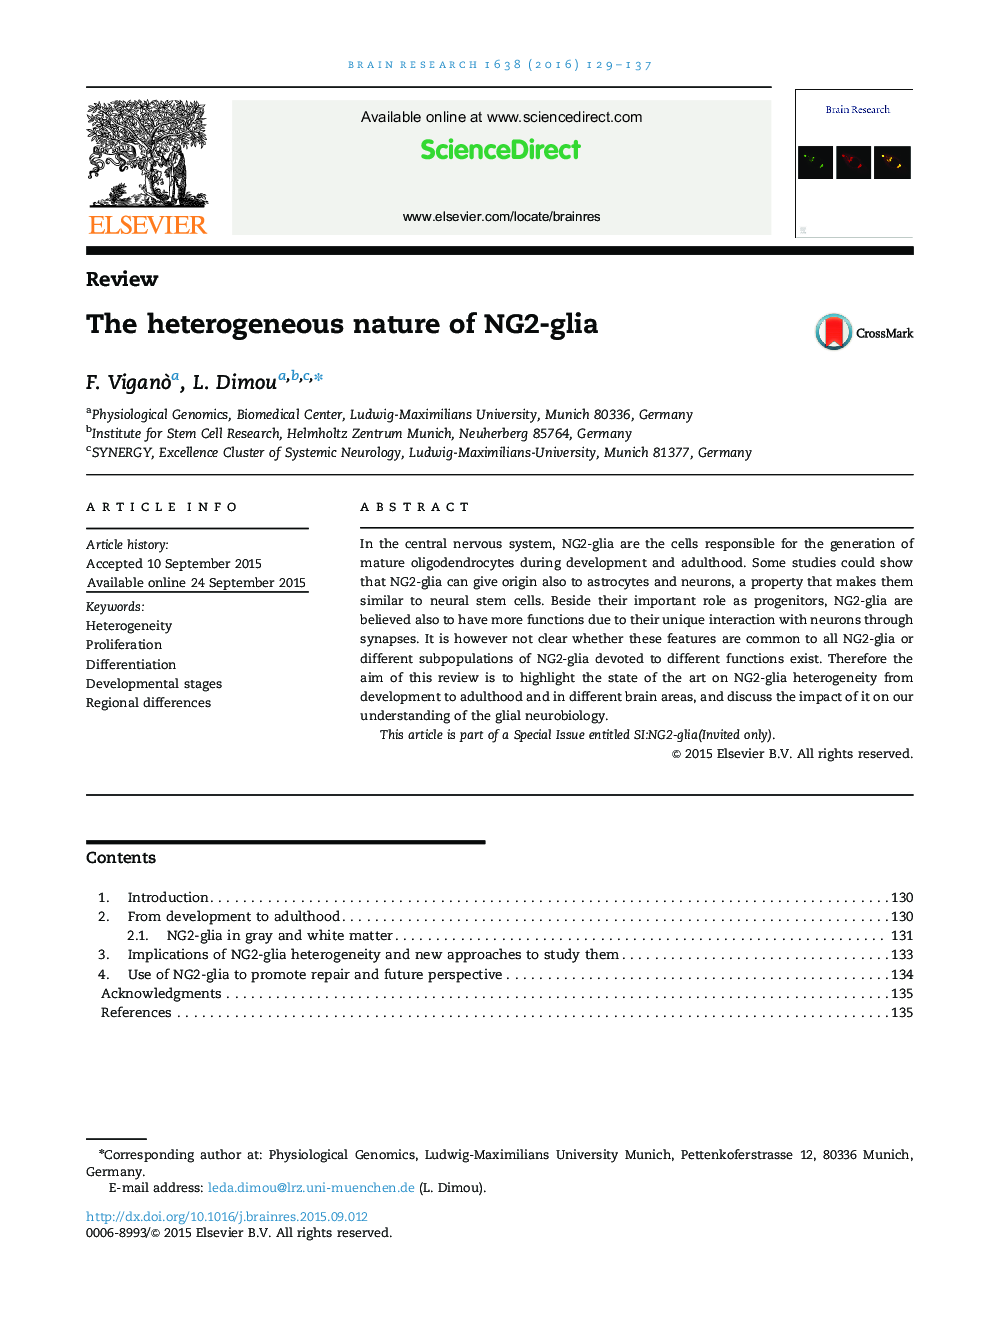 The heterogeneous nature of NG2-glia